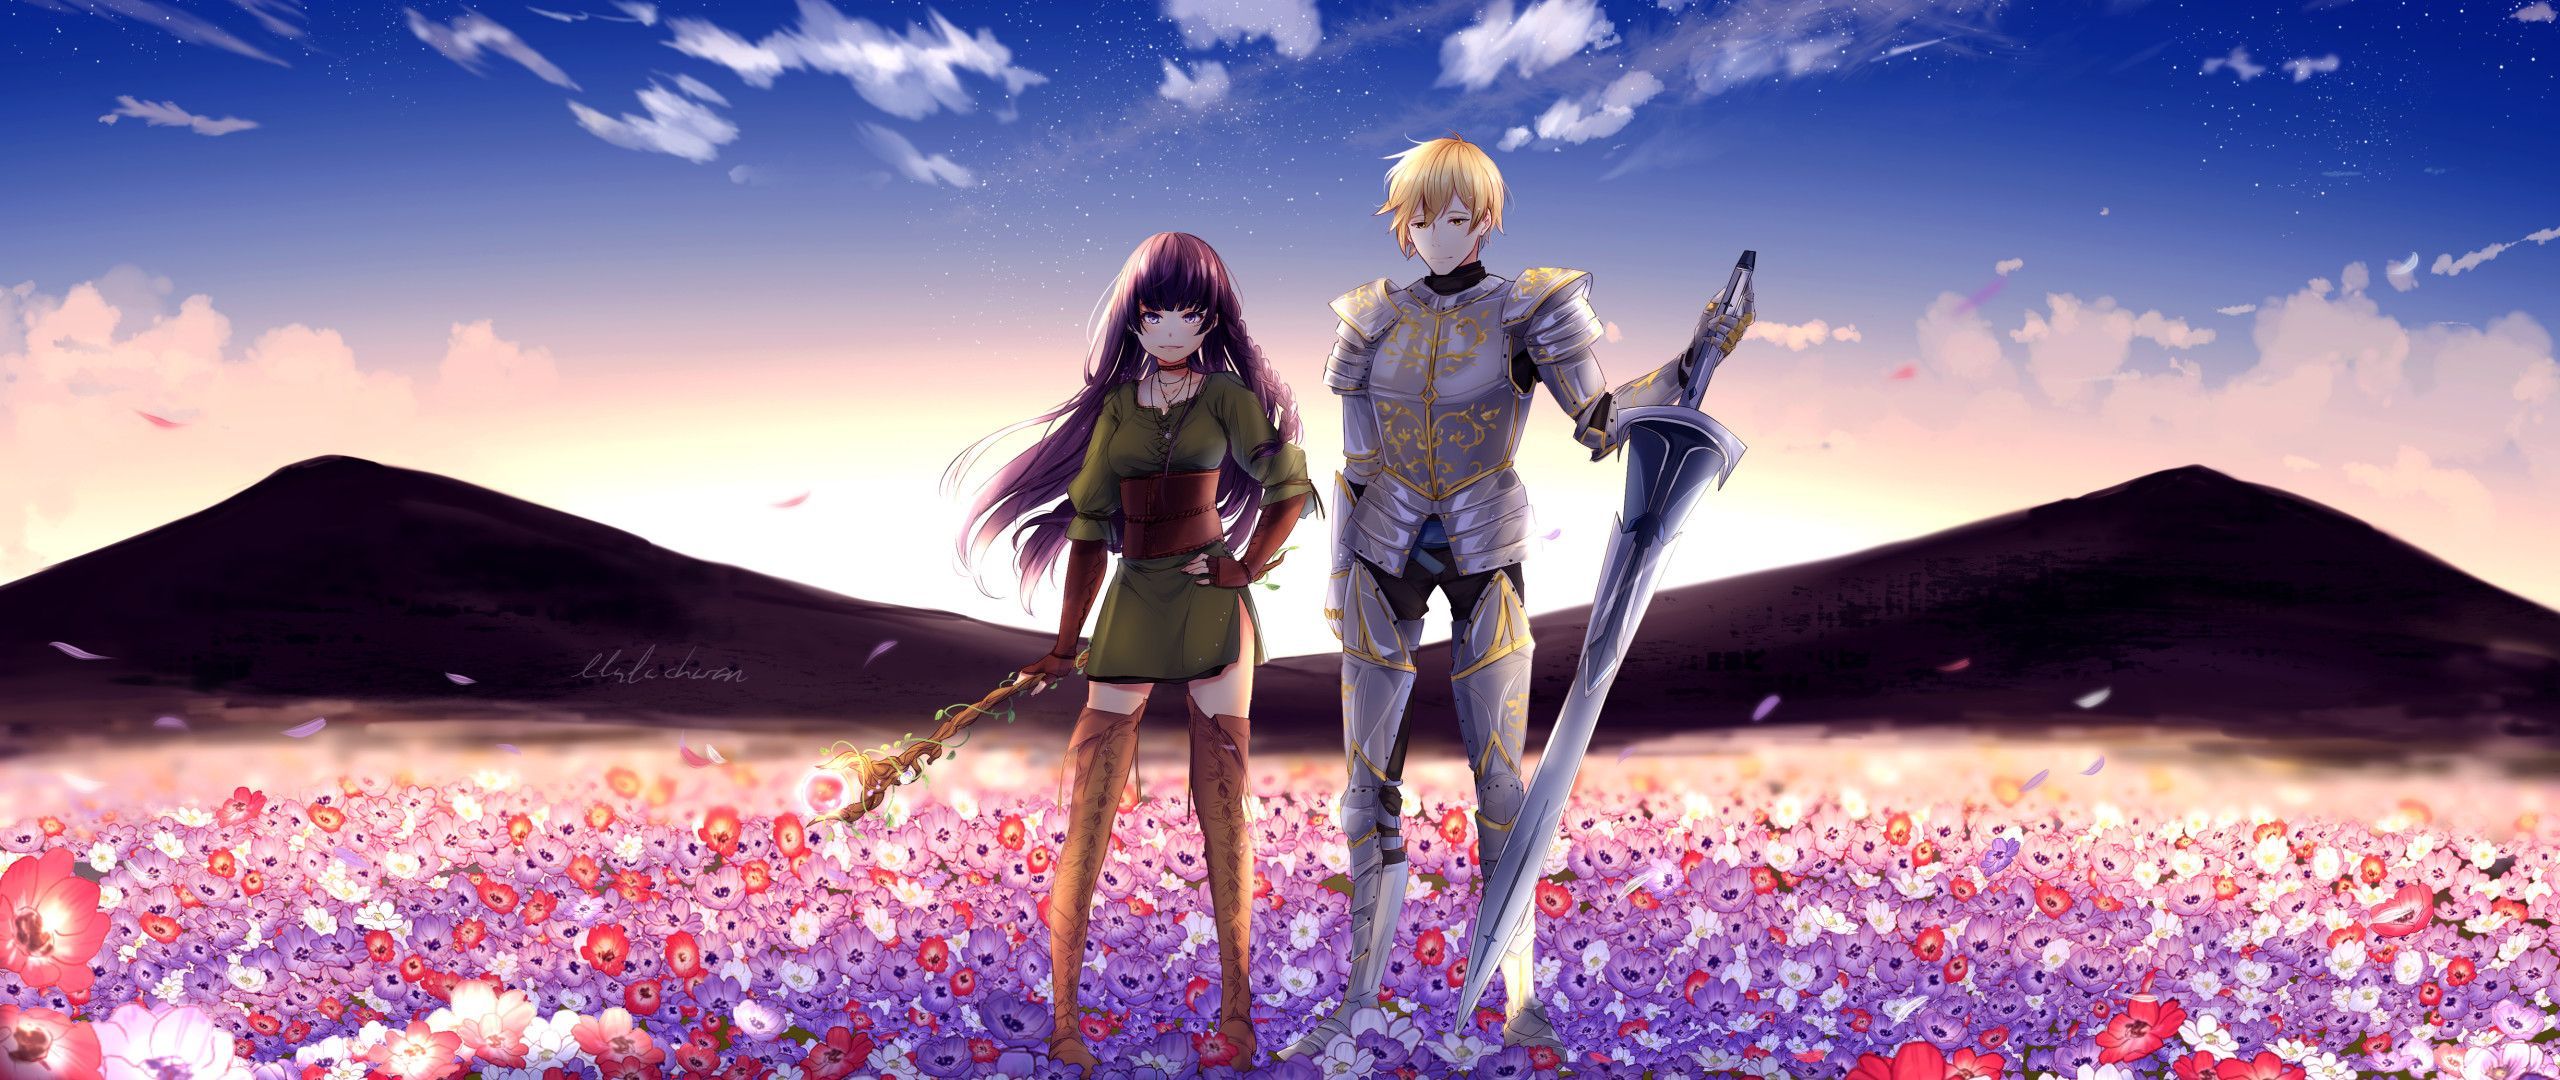 Anime 2560x1080 Wallpaper Free Anime 2560x1080 Background